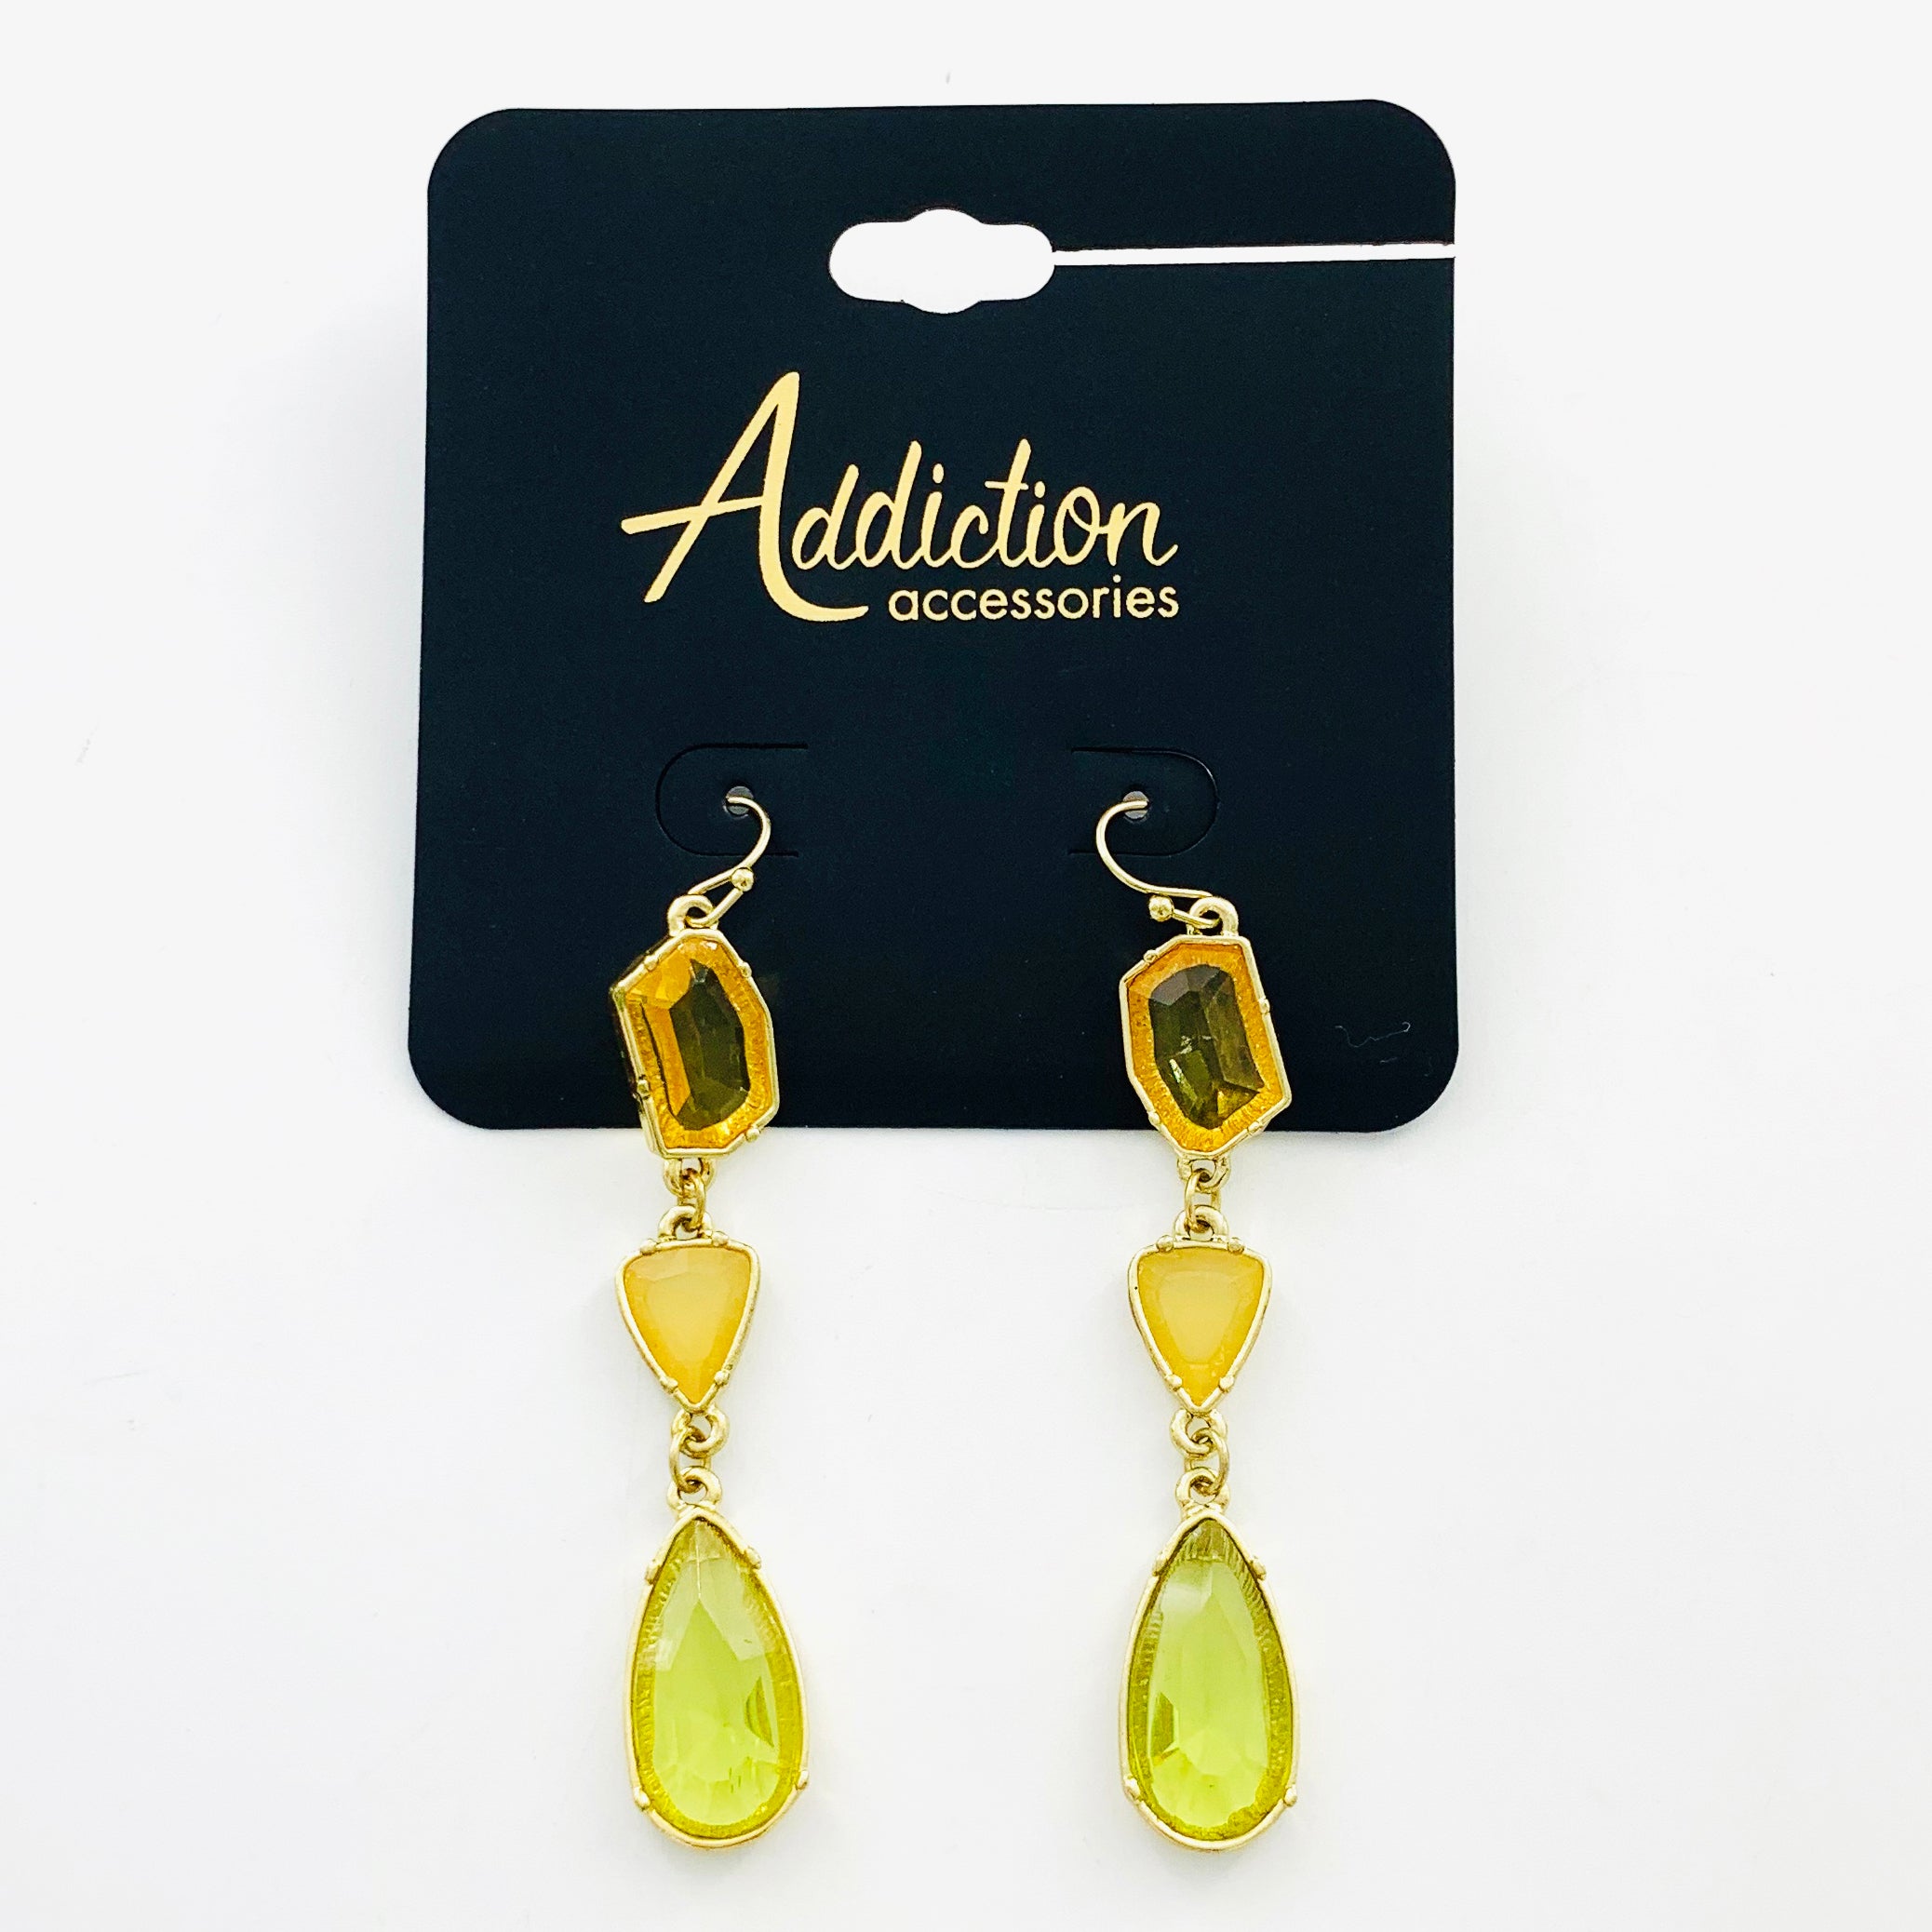 Dangling yellow and green stone earrings